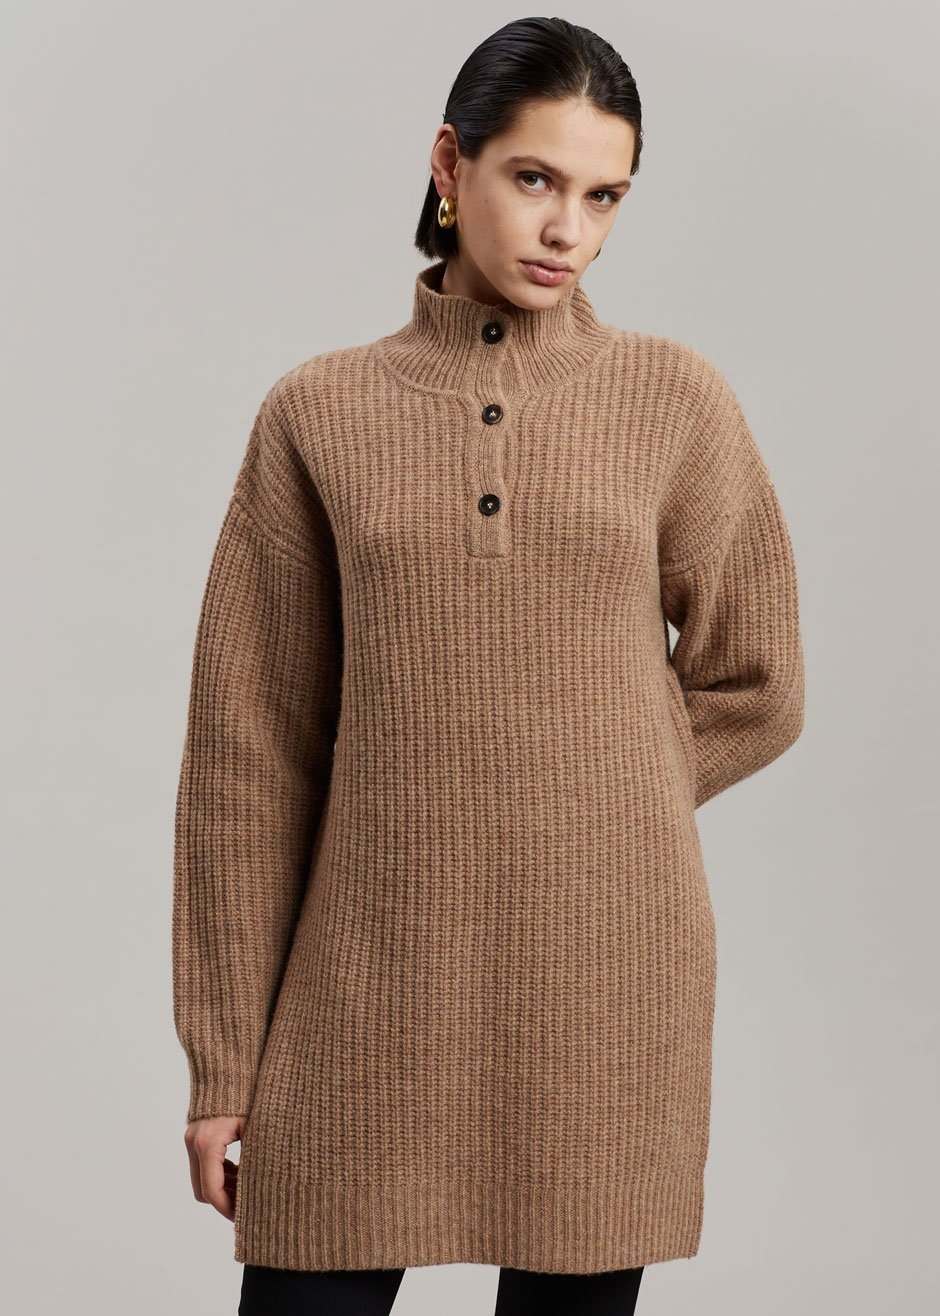 The Garment Canada Sweater Dress - Light Brown - 1